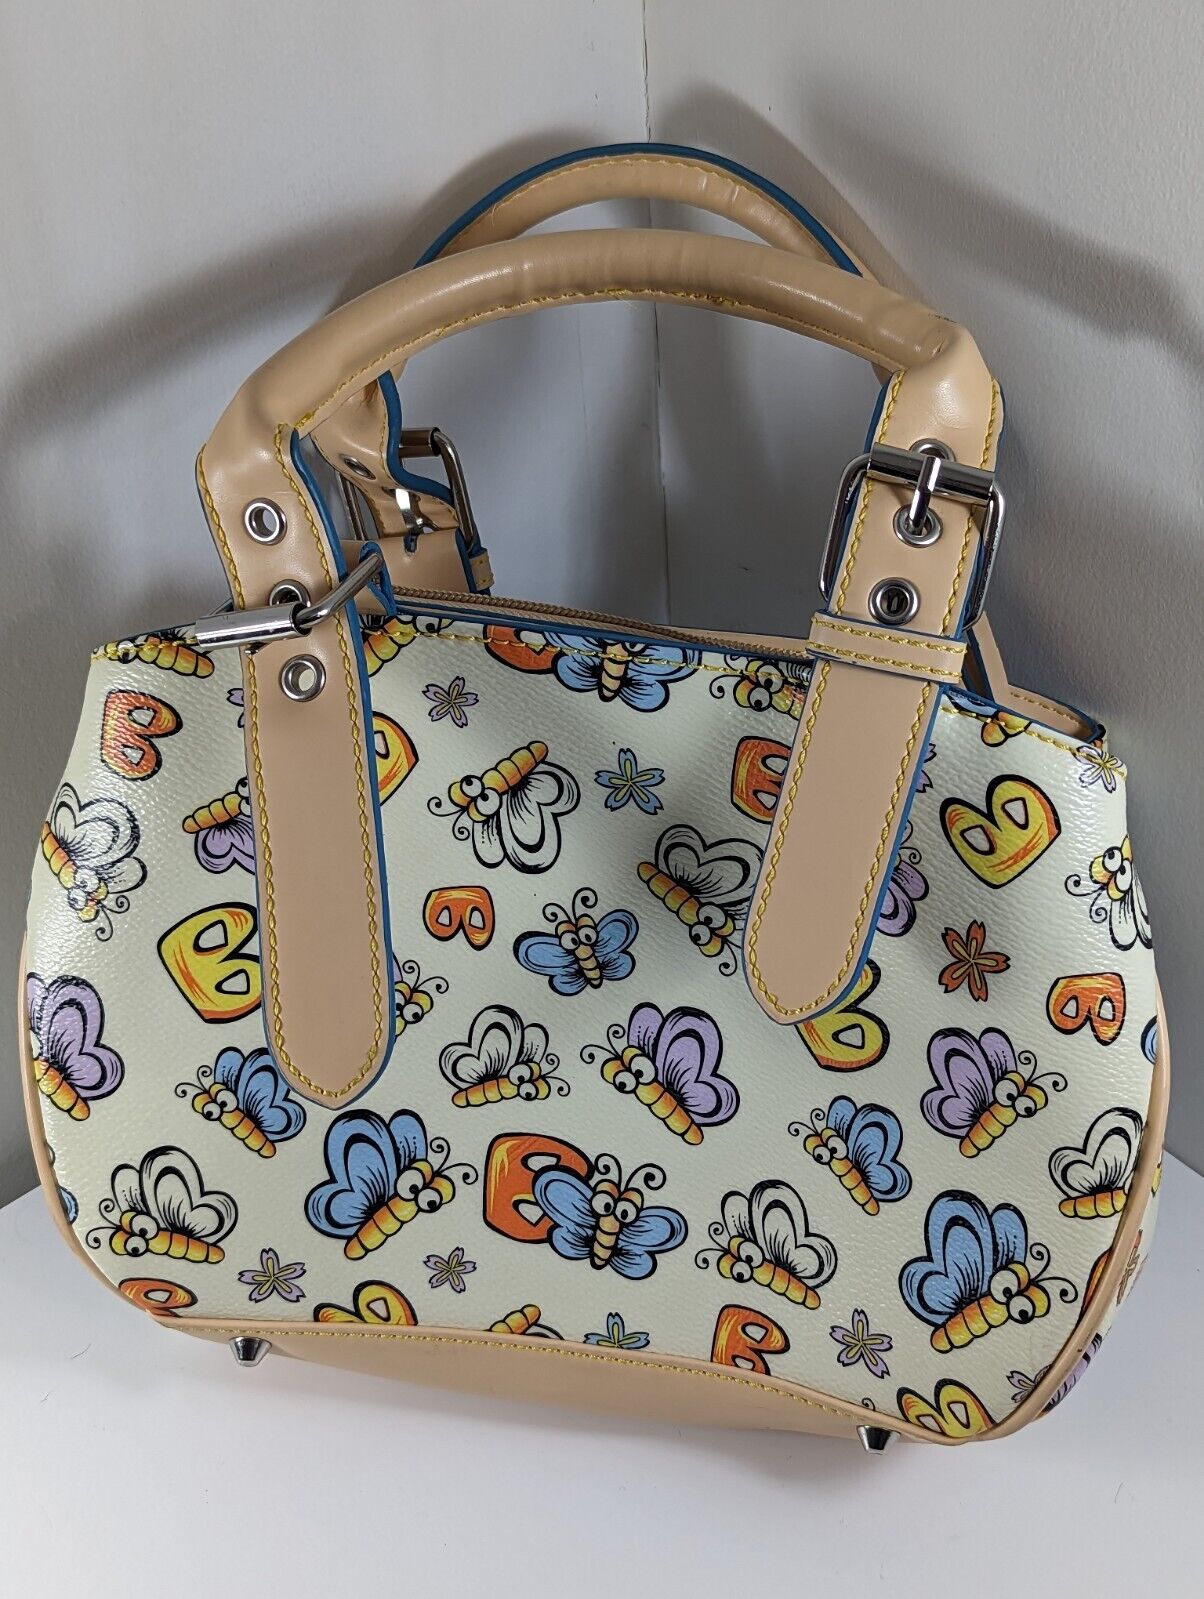 B\'s Butterfly Dooney & Bourke Disney Style Tote White + Tan multicolor purse bag